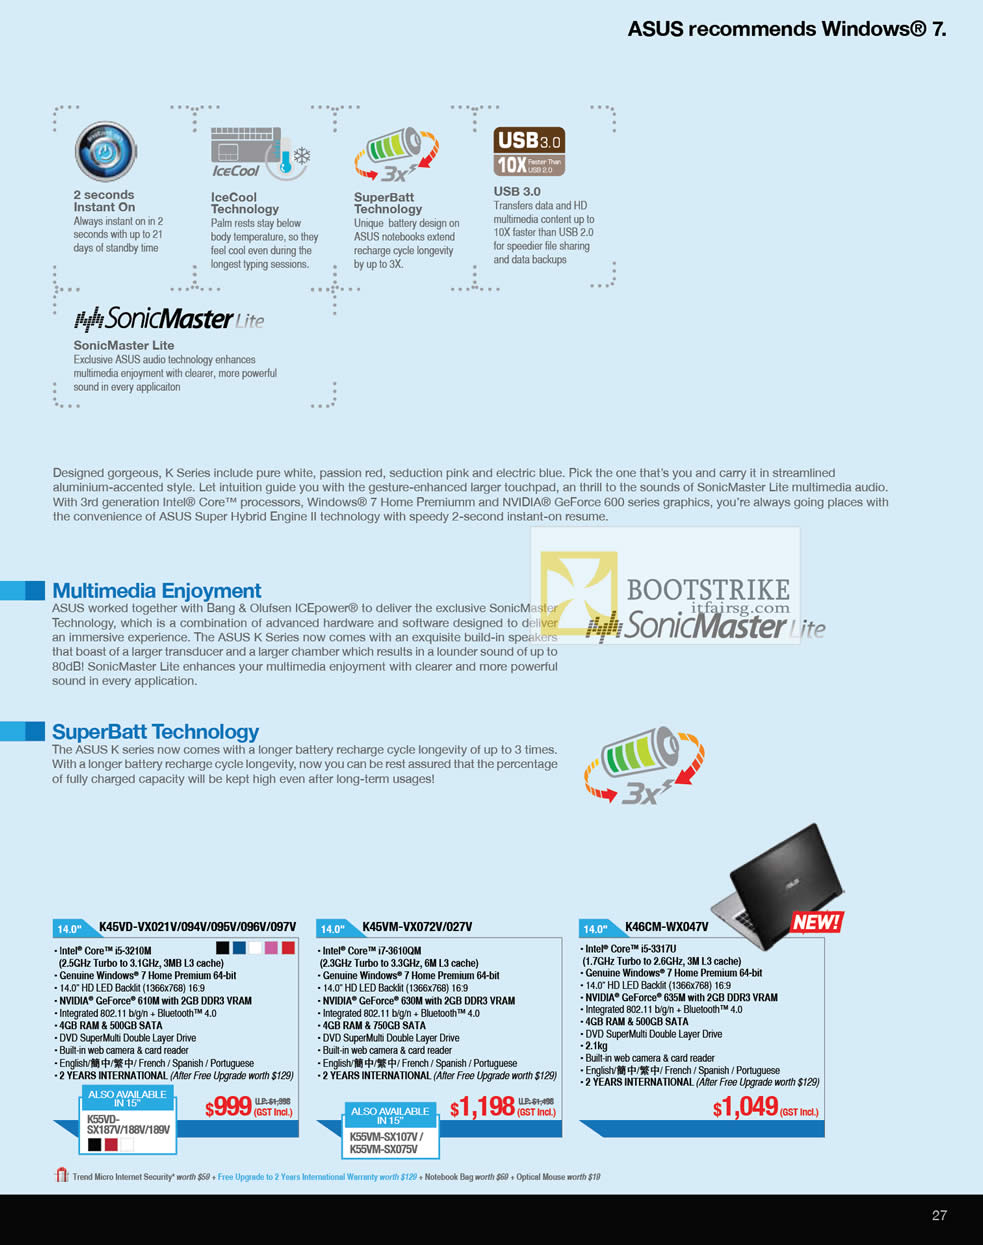 COMEX 2012 price list image brochure of ASUS Notebooks K Series SonicMaster, SuperBatt, IceCool, K45VD-VX021V 094V 095V 096V 097V, K45VM-VX072V 027V, K46CM-WX047V